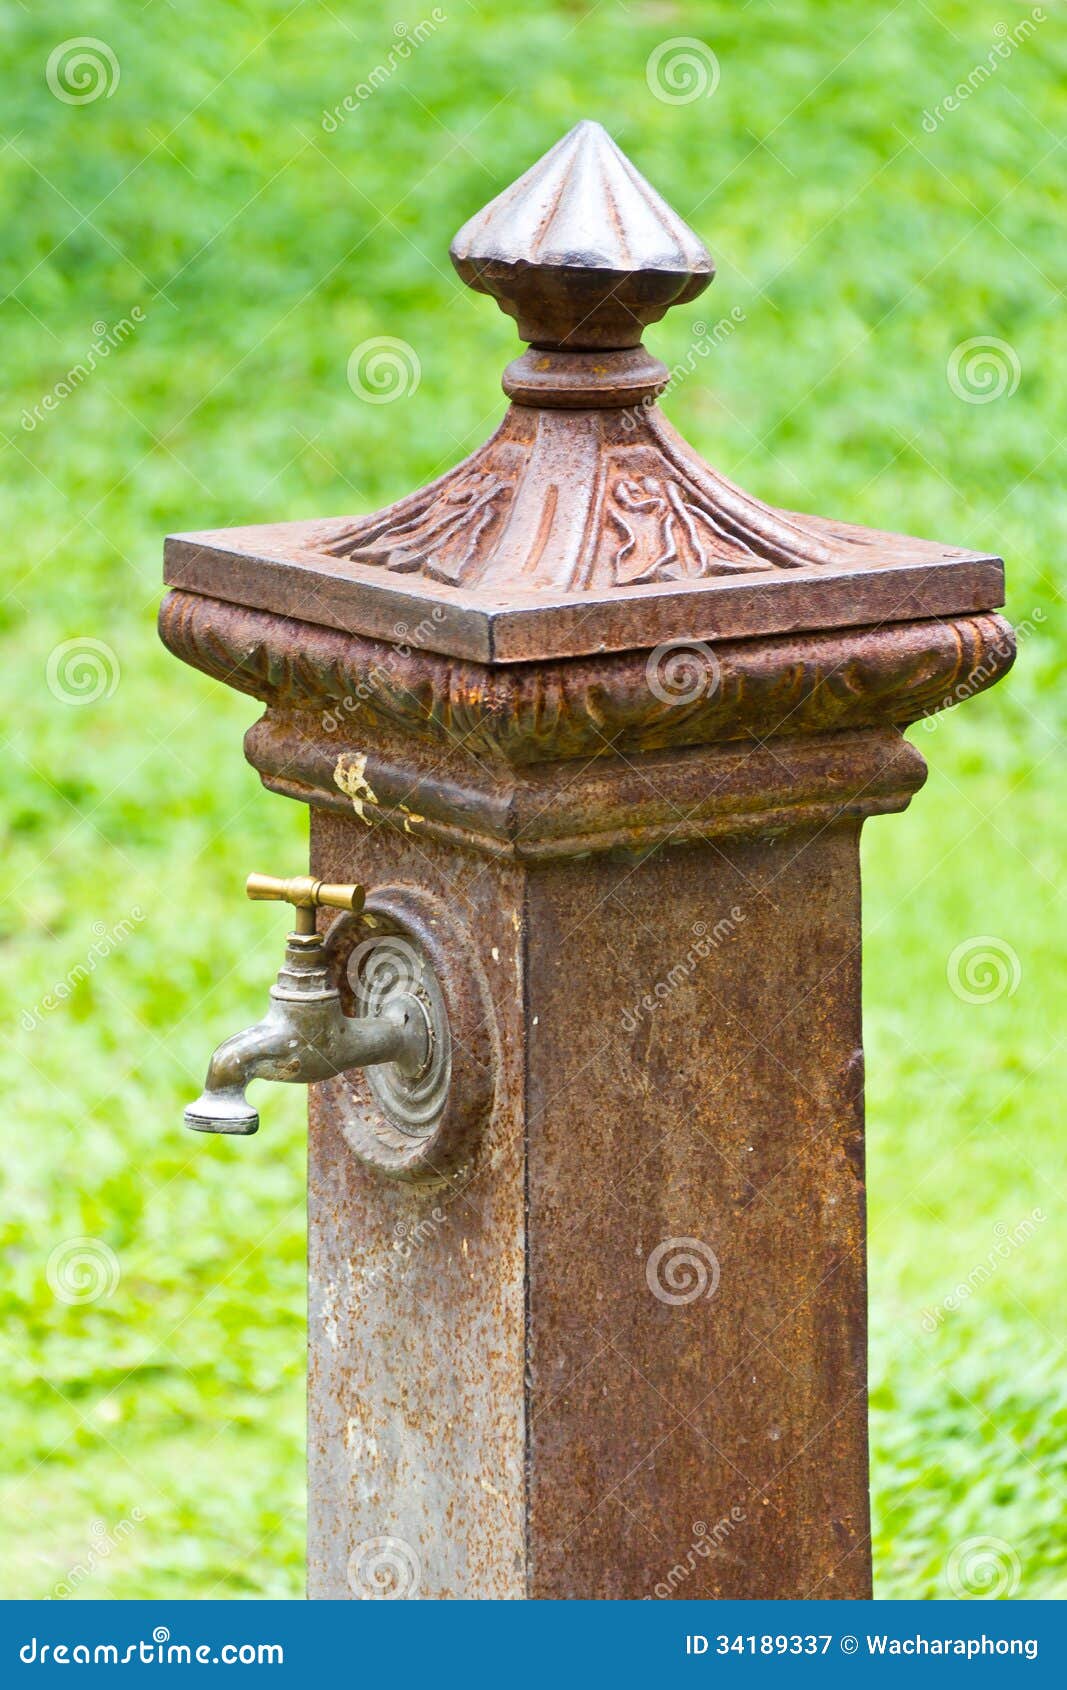 italian style faucet ancient decorative garden 34189337